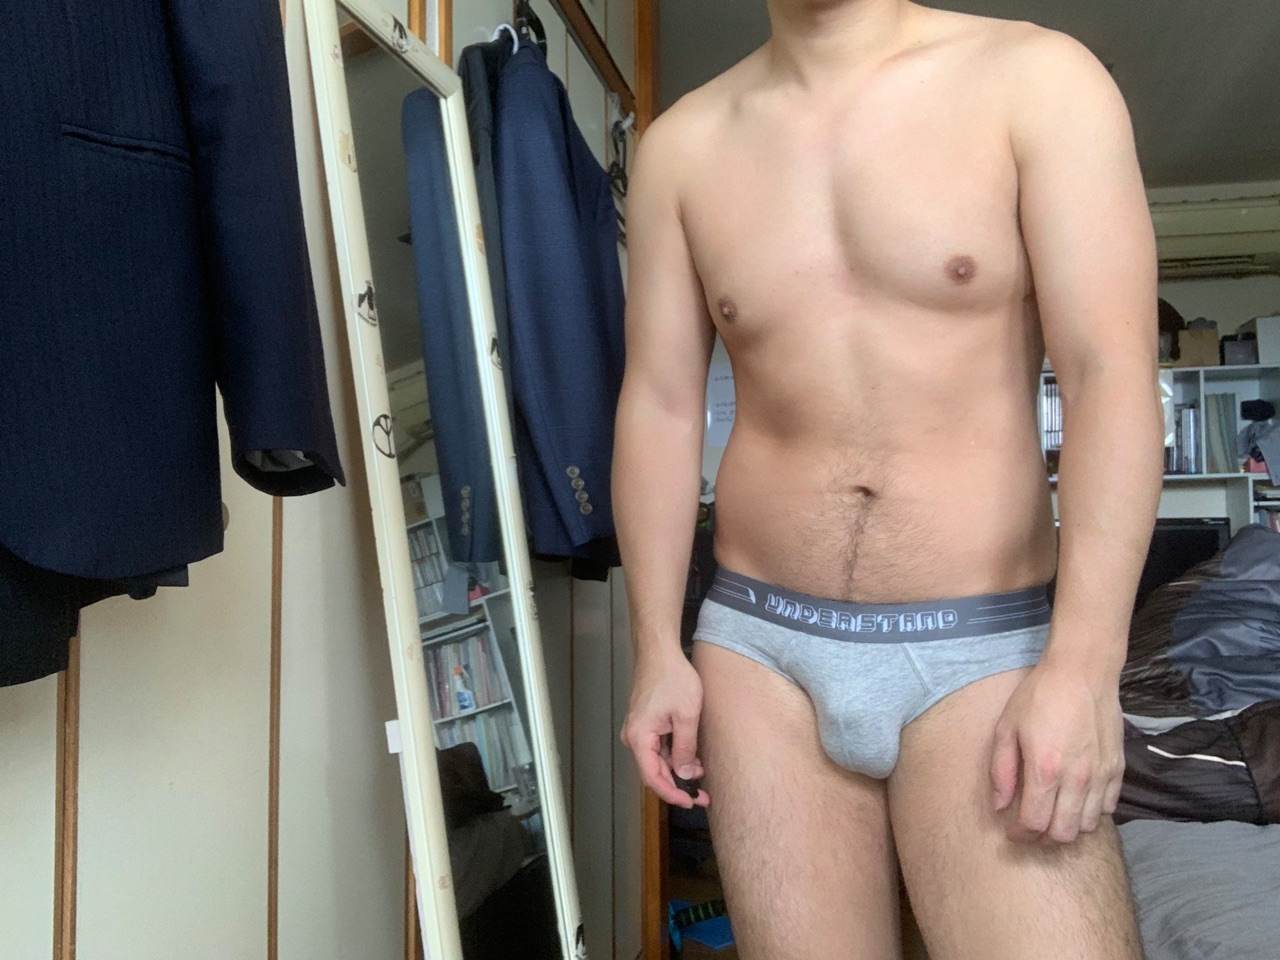 Hot men in underwear 487